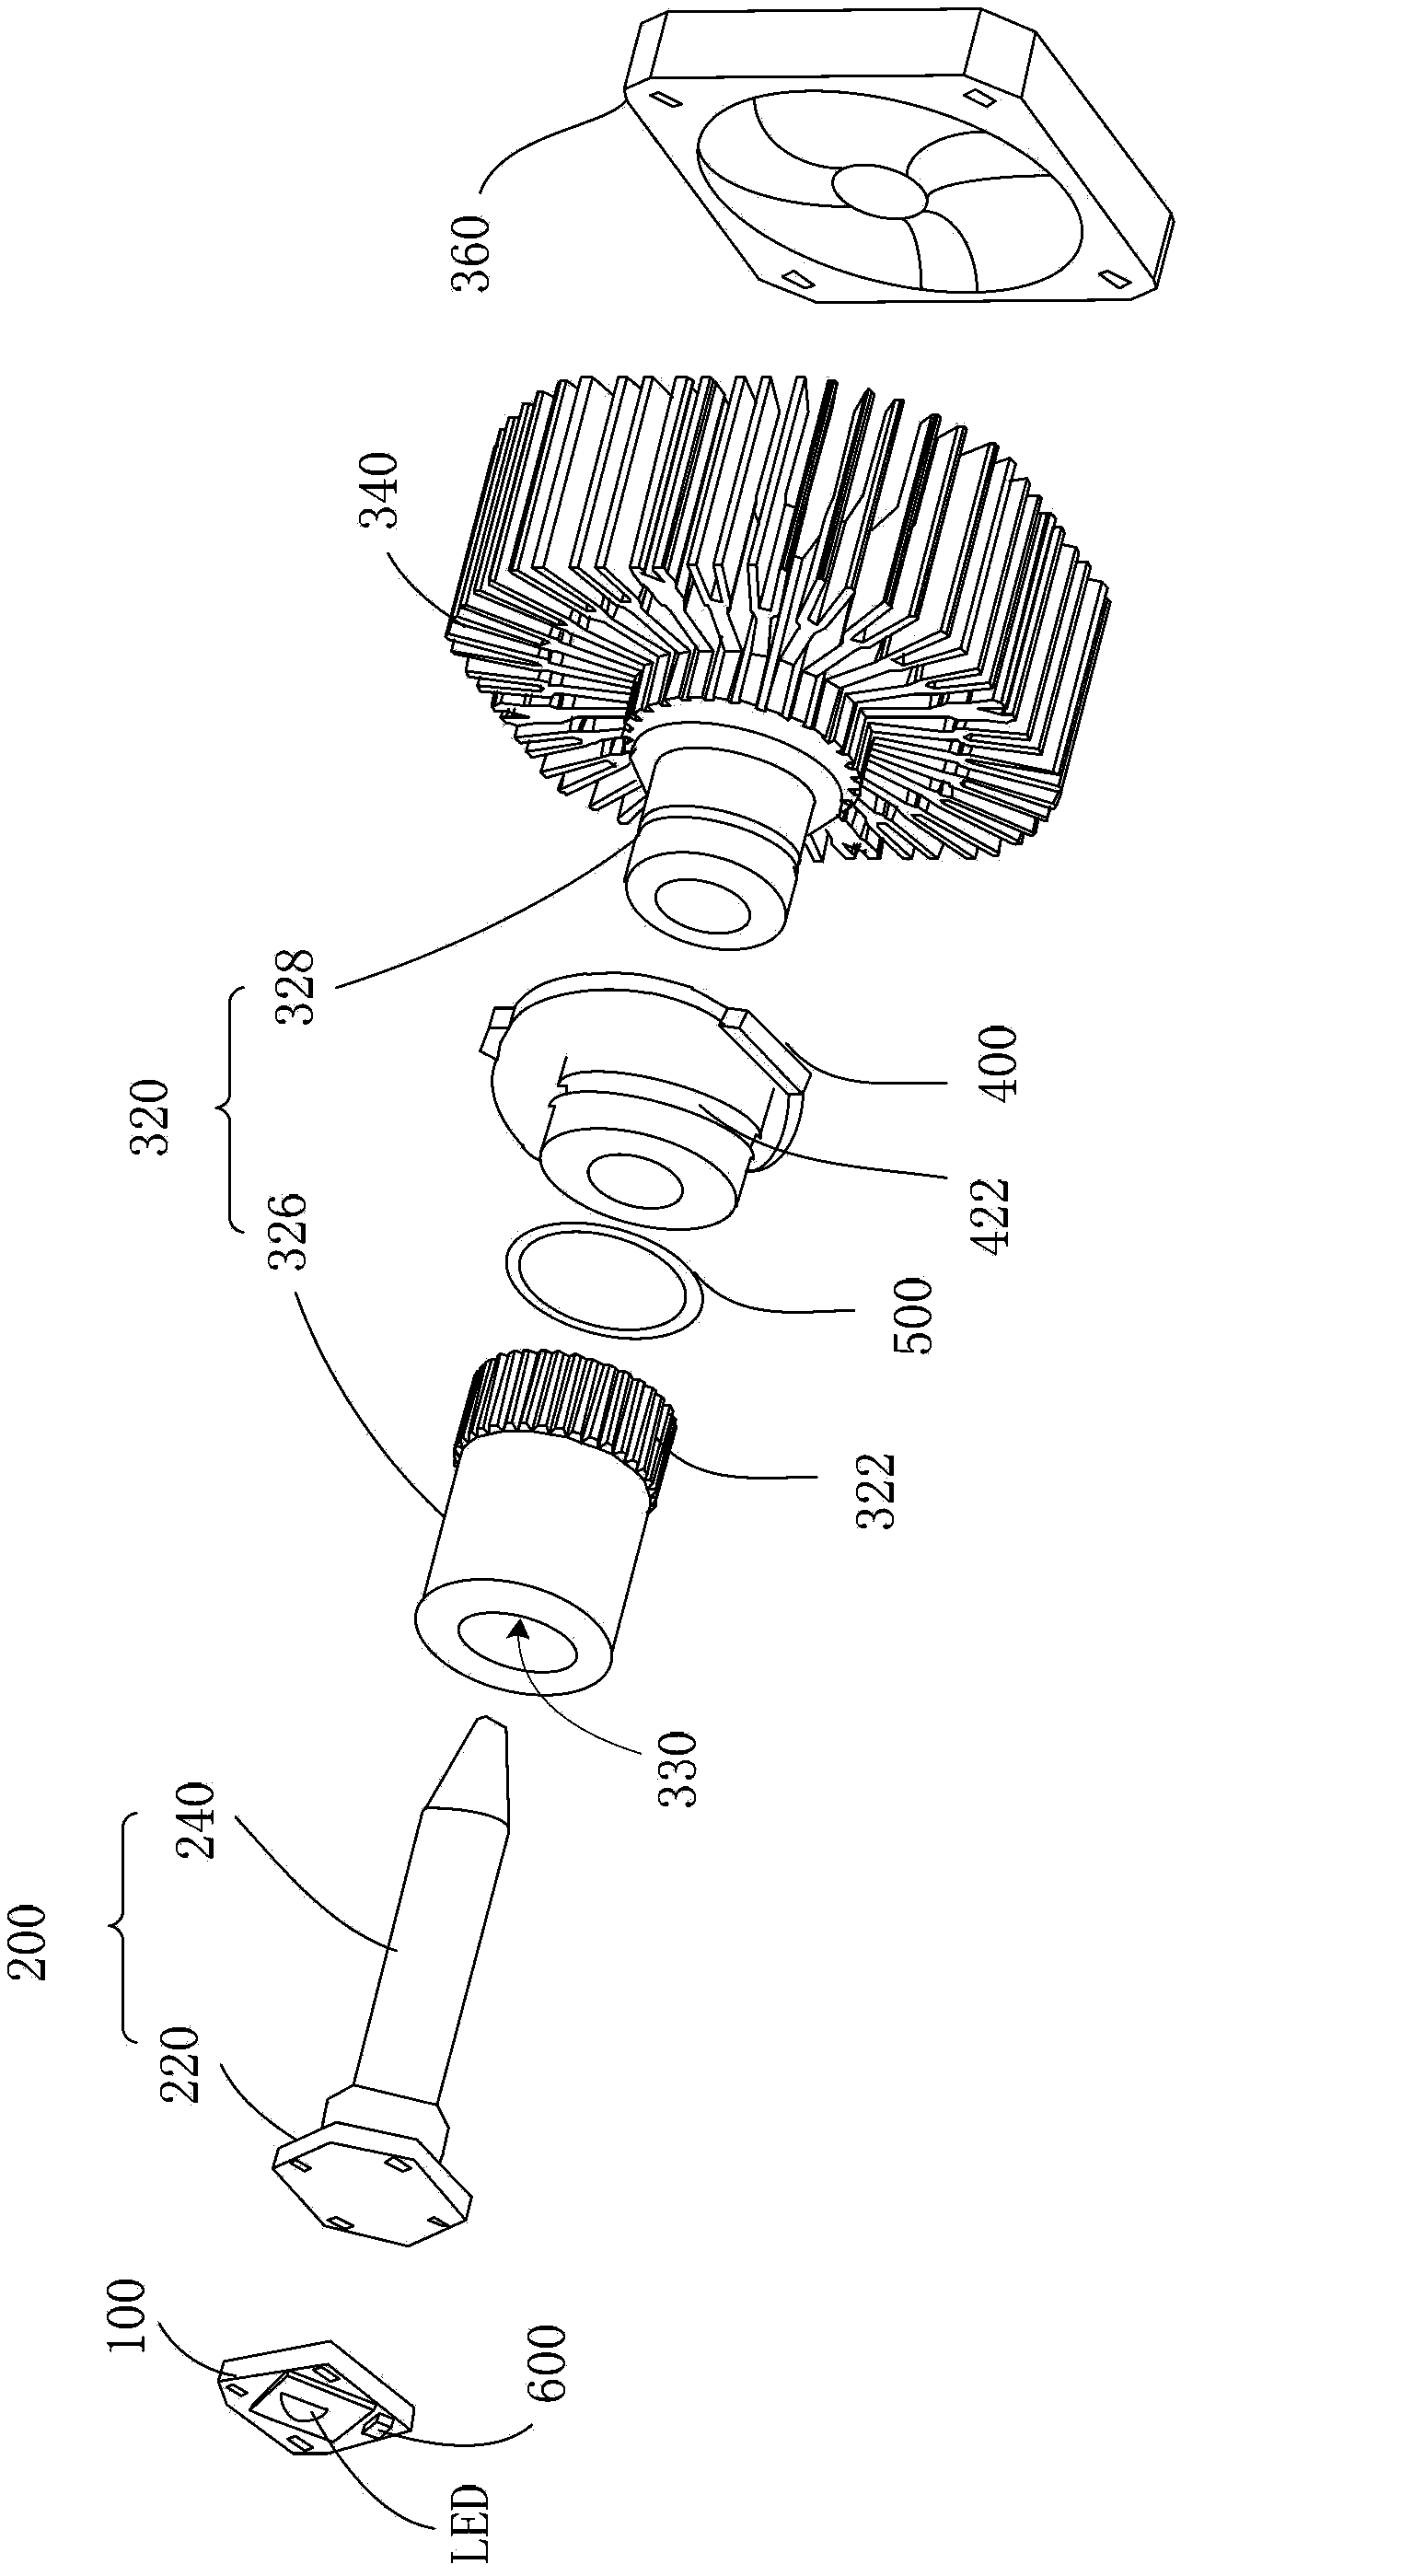 Light-emitting diode (LED) automobile headlamp